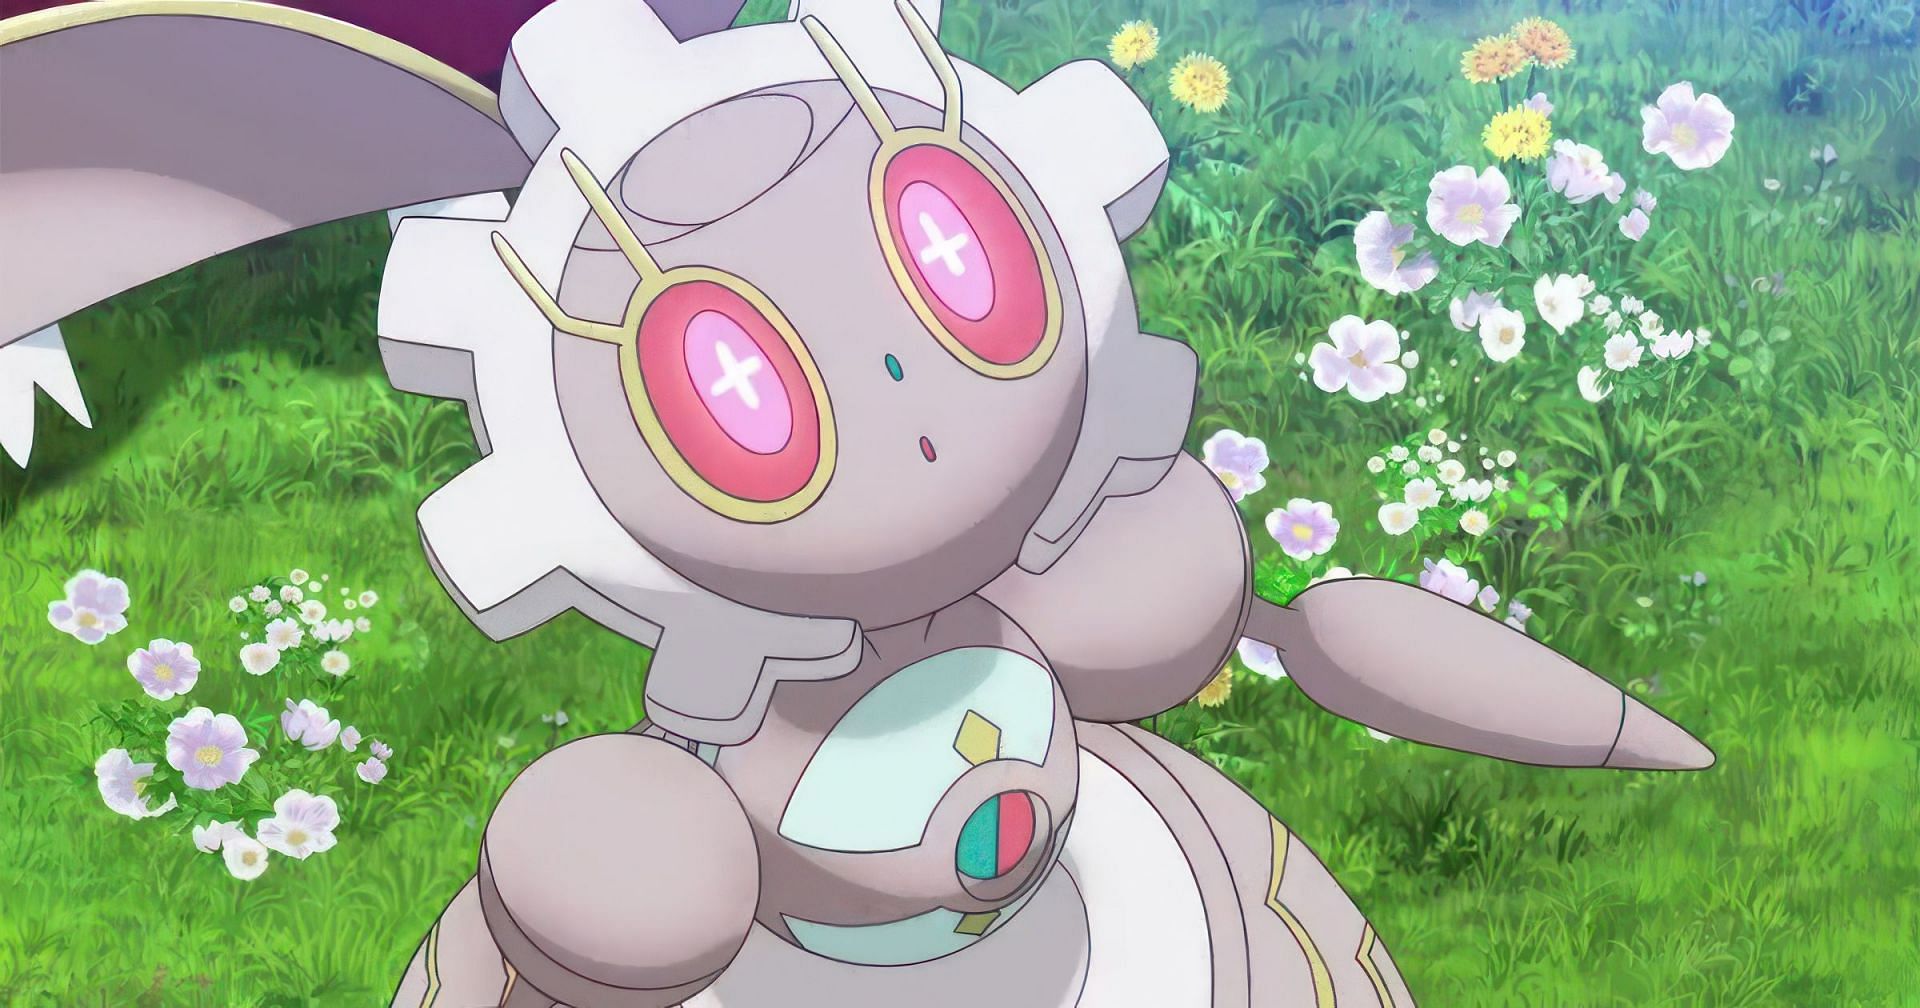 Magearna as seen in the anime (Image via The Pokemon Company)